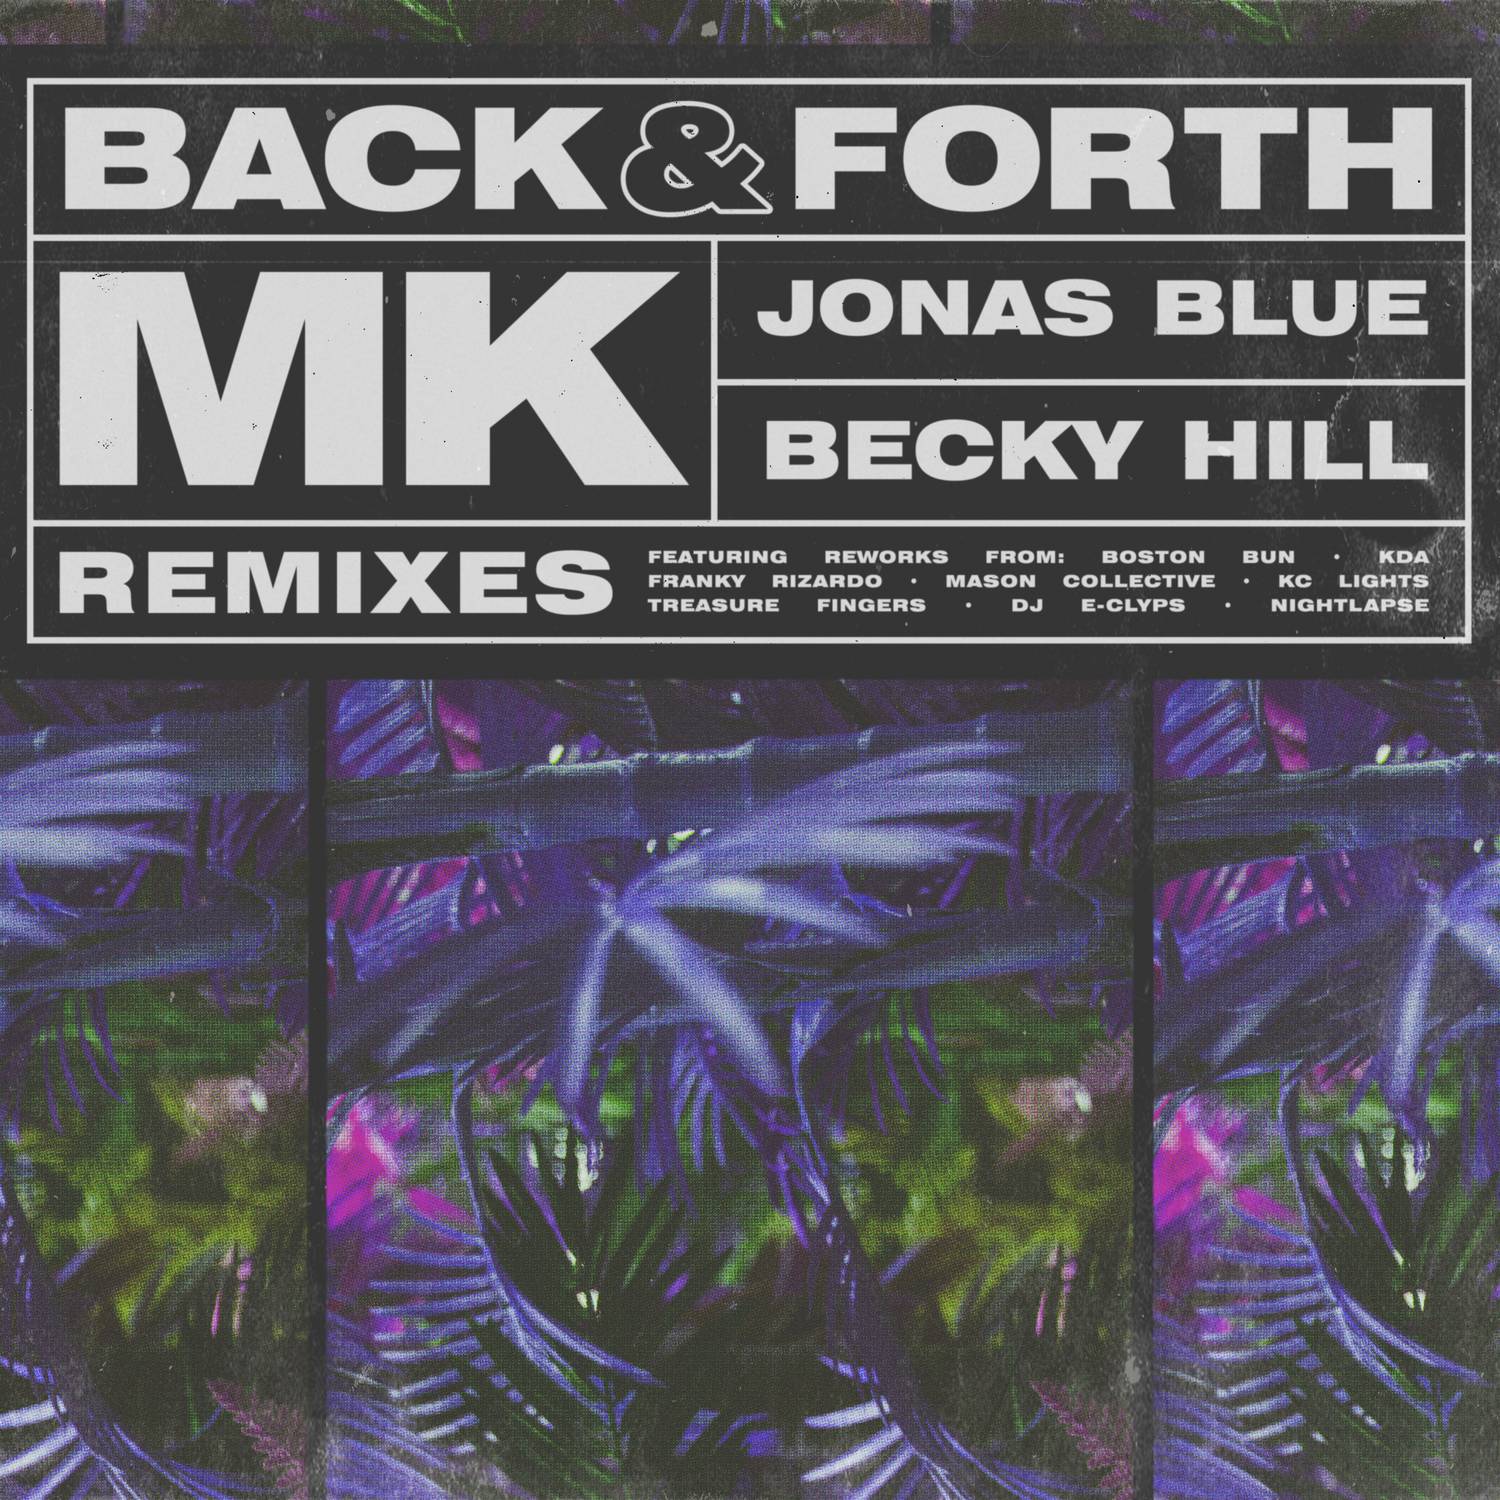 Back & Forth (Boston Bun Disco Frenetico Remix)